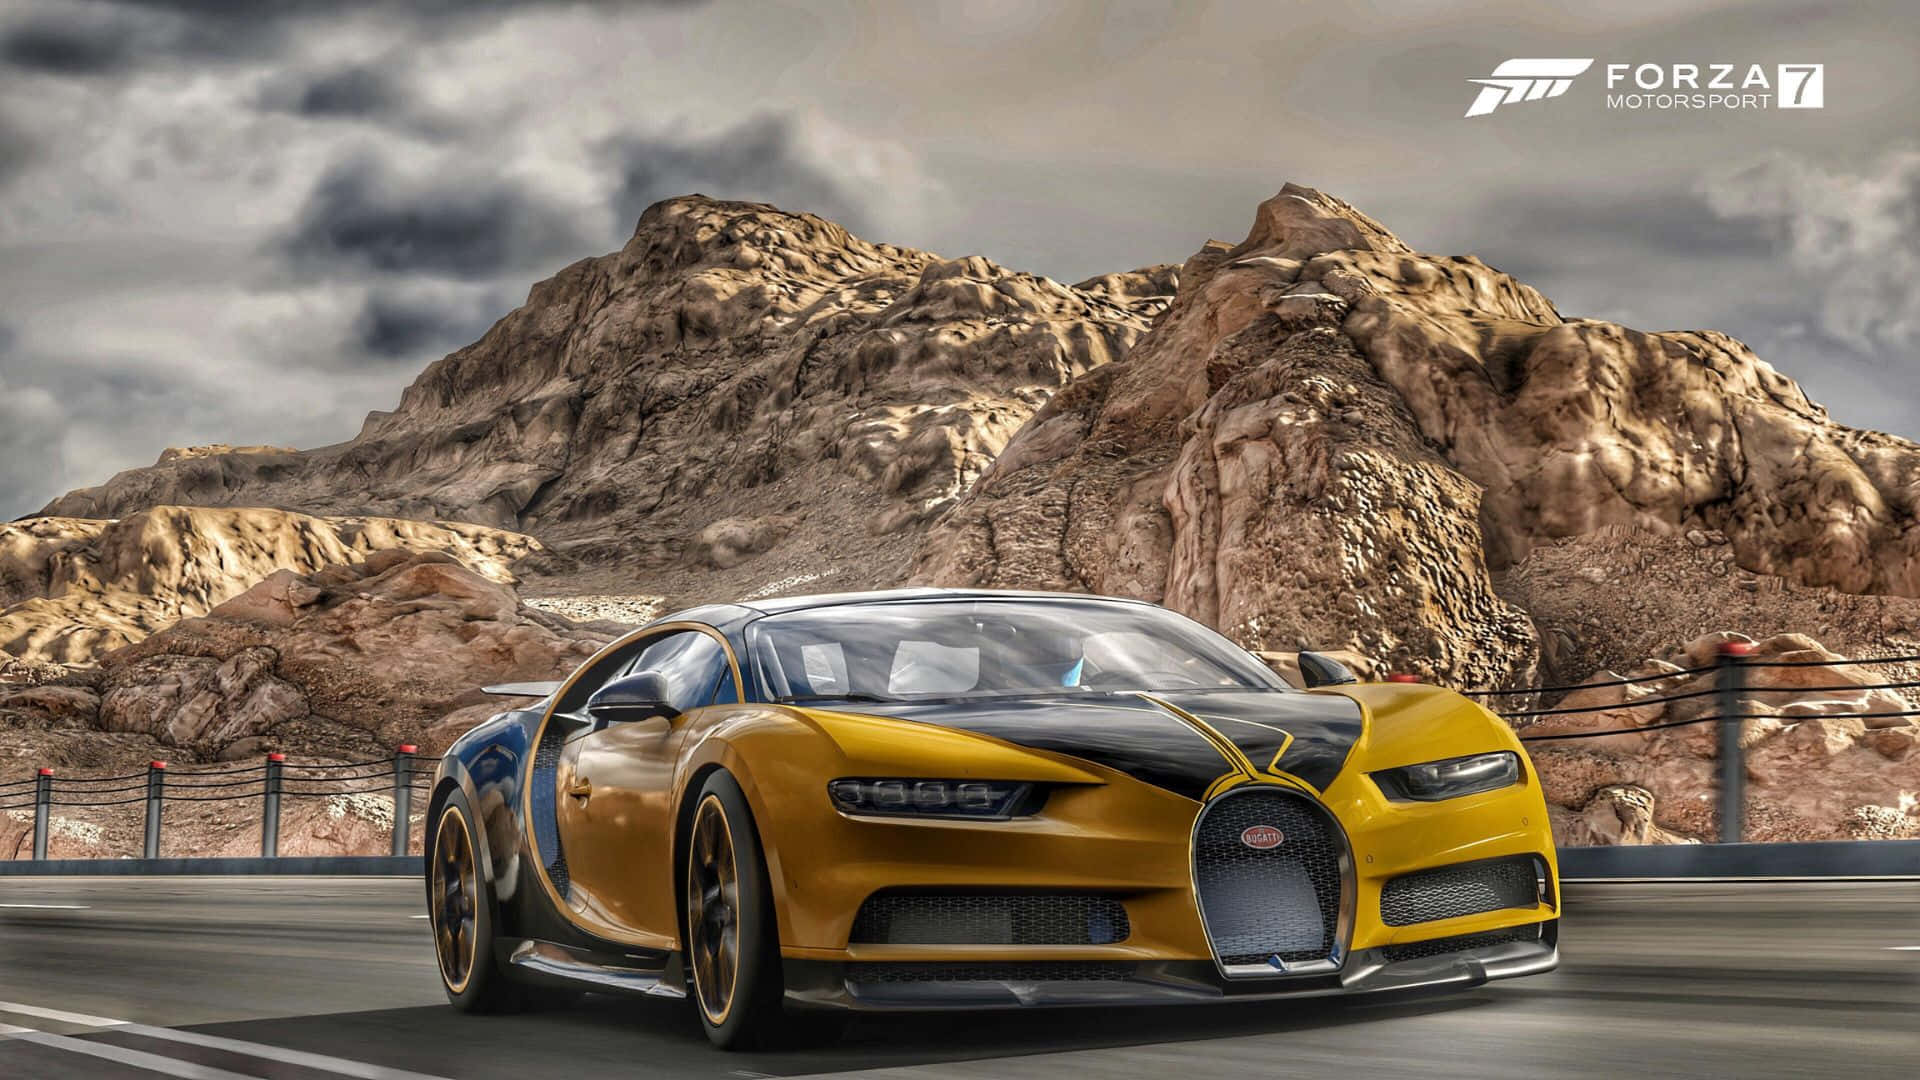 Fondode Pantalla Hd De Forza Motorsport 7 Y Bugatti Chiron